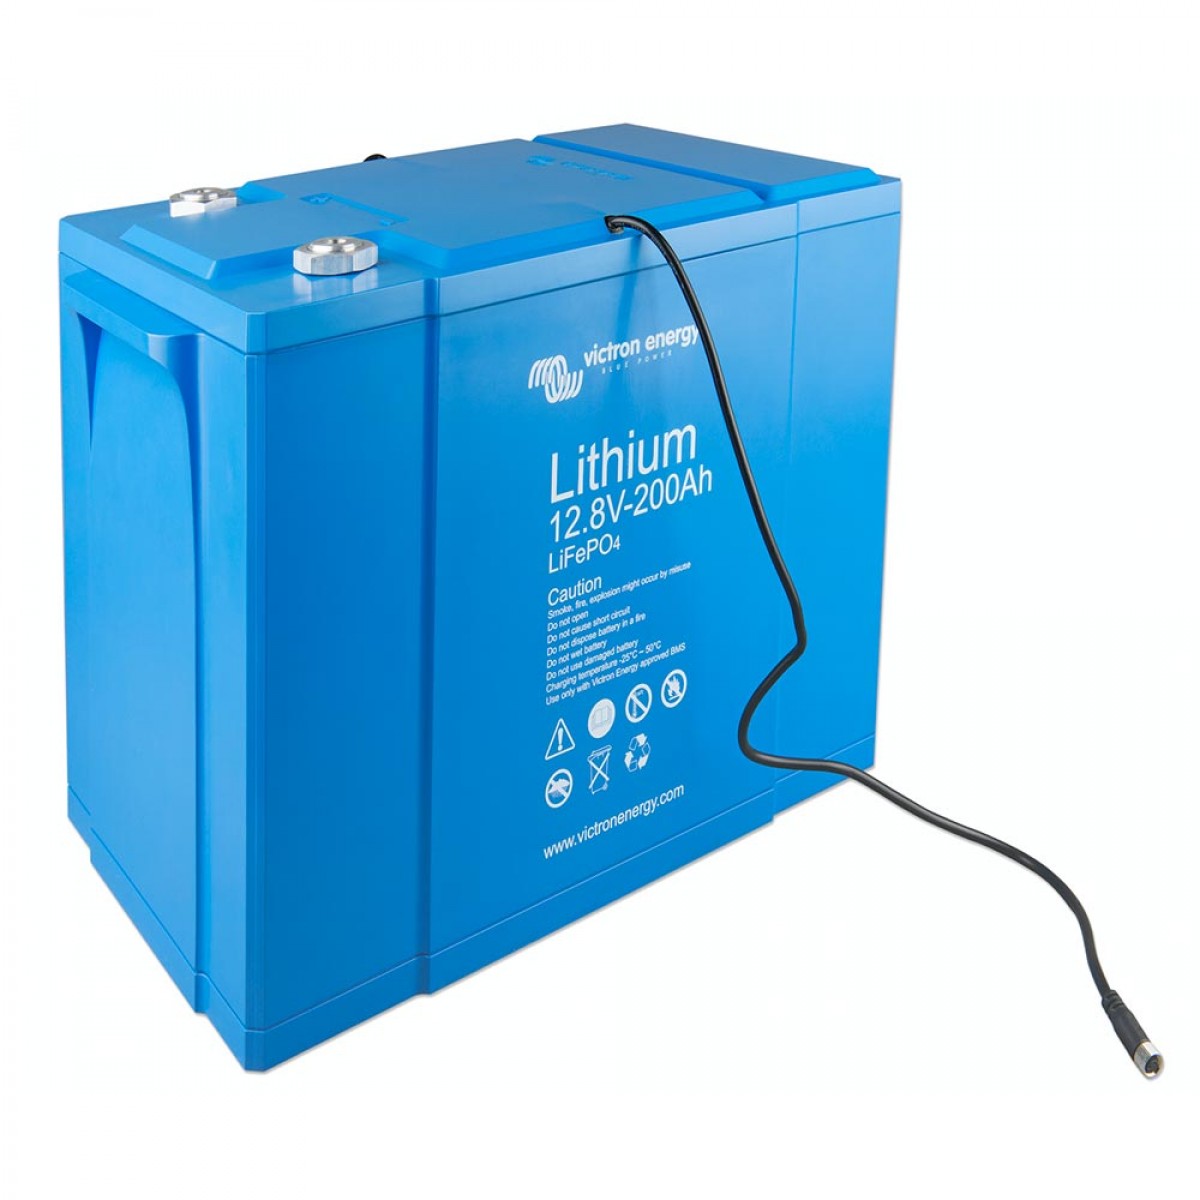 12,8V Lithium 80Ah LiFePO4 Premium Batterie, 200A-BMS-2.0